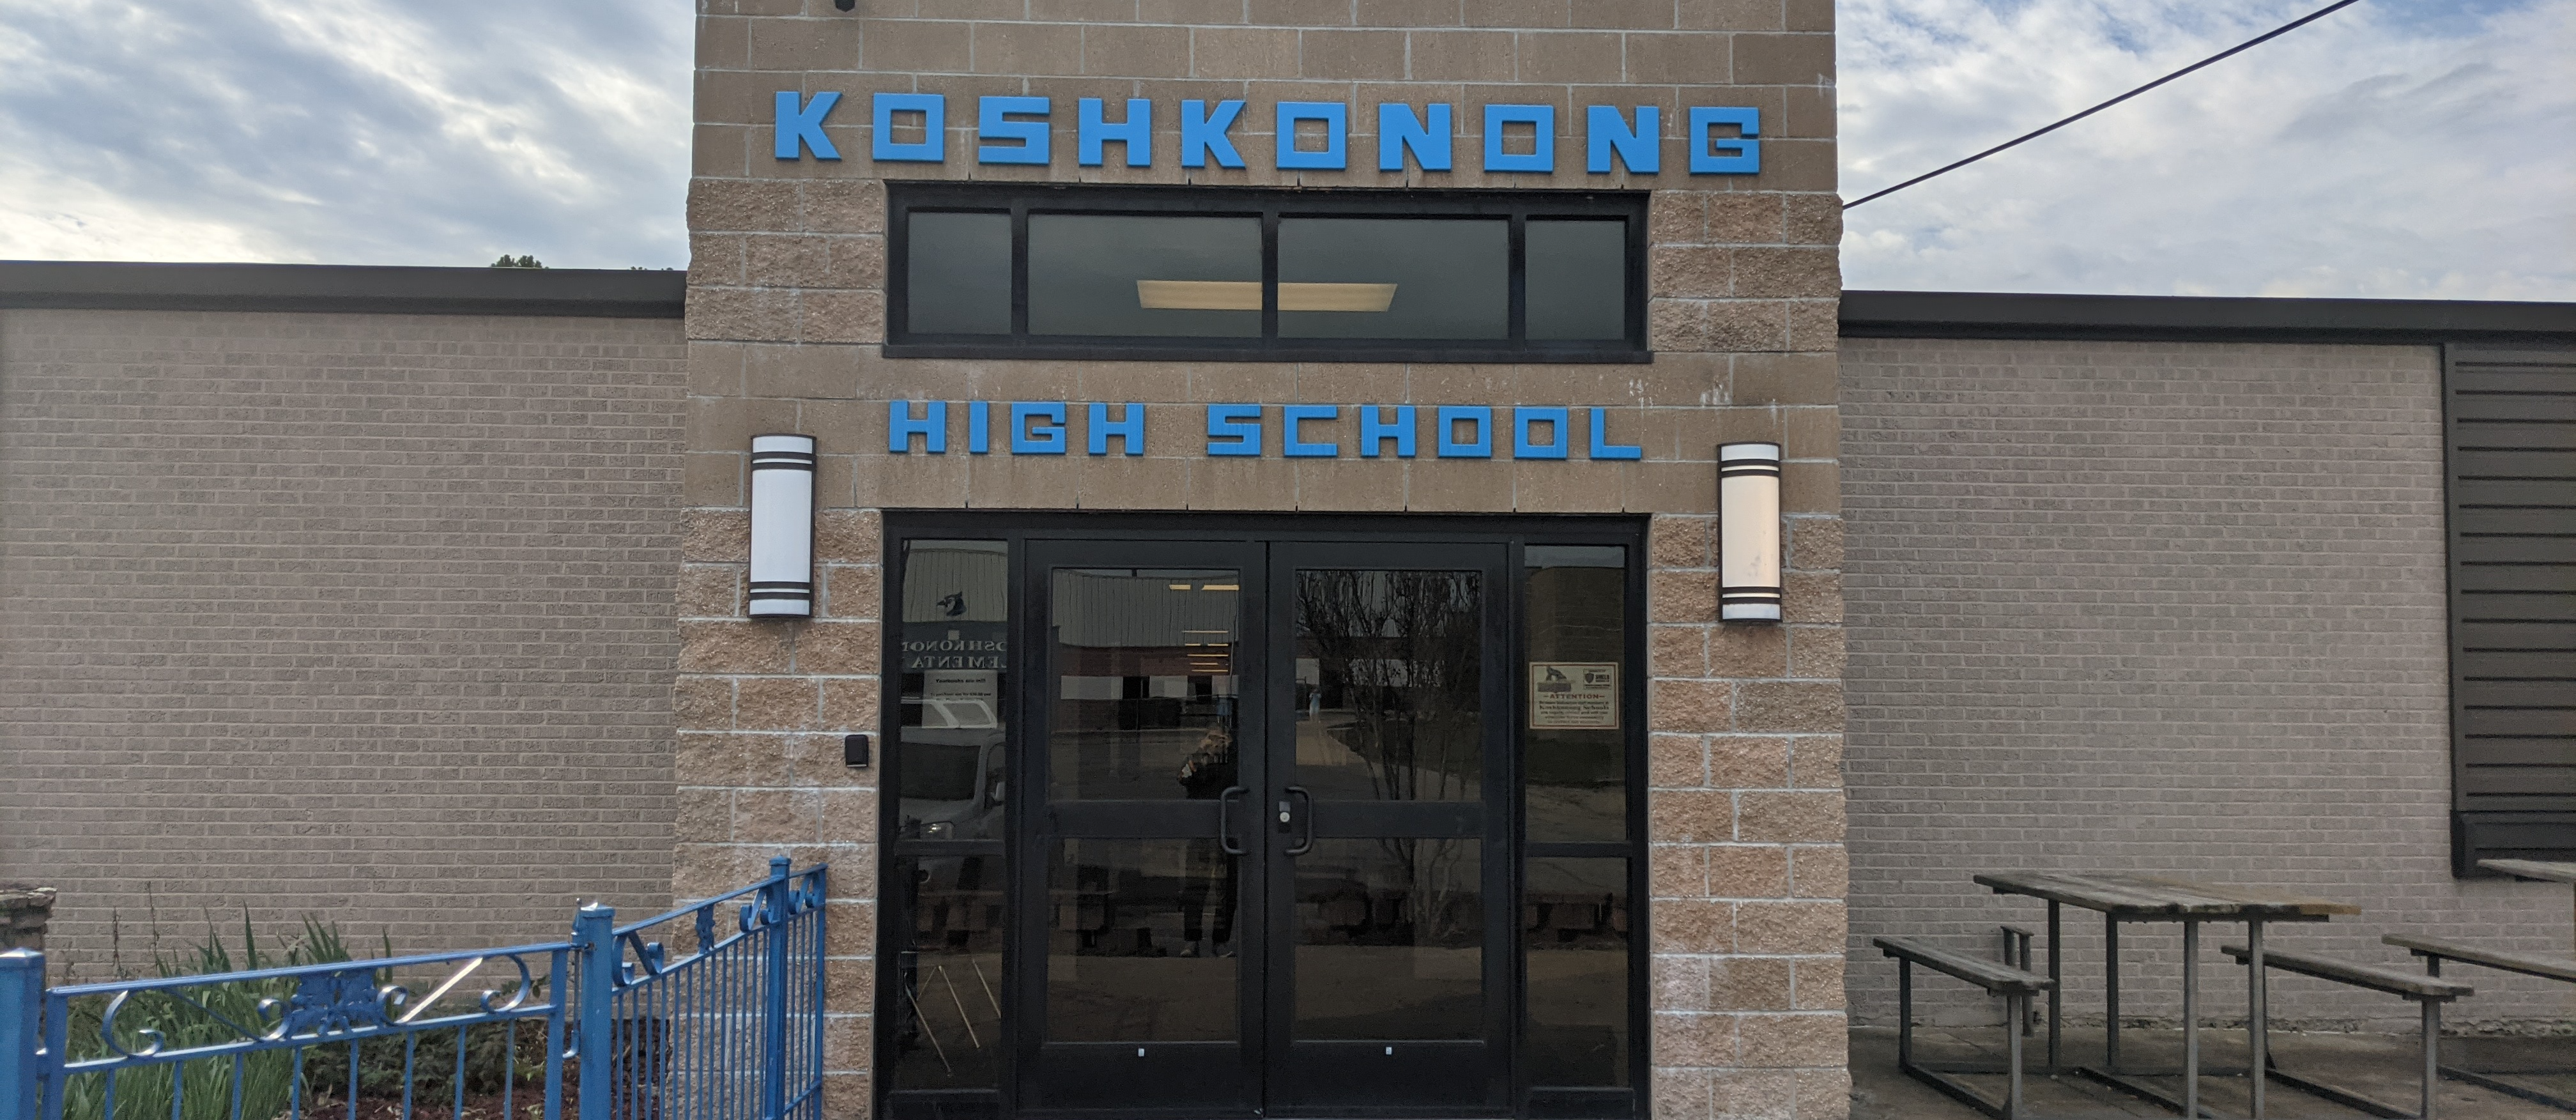 Image of Current Koshkonong High School Building